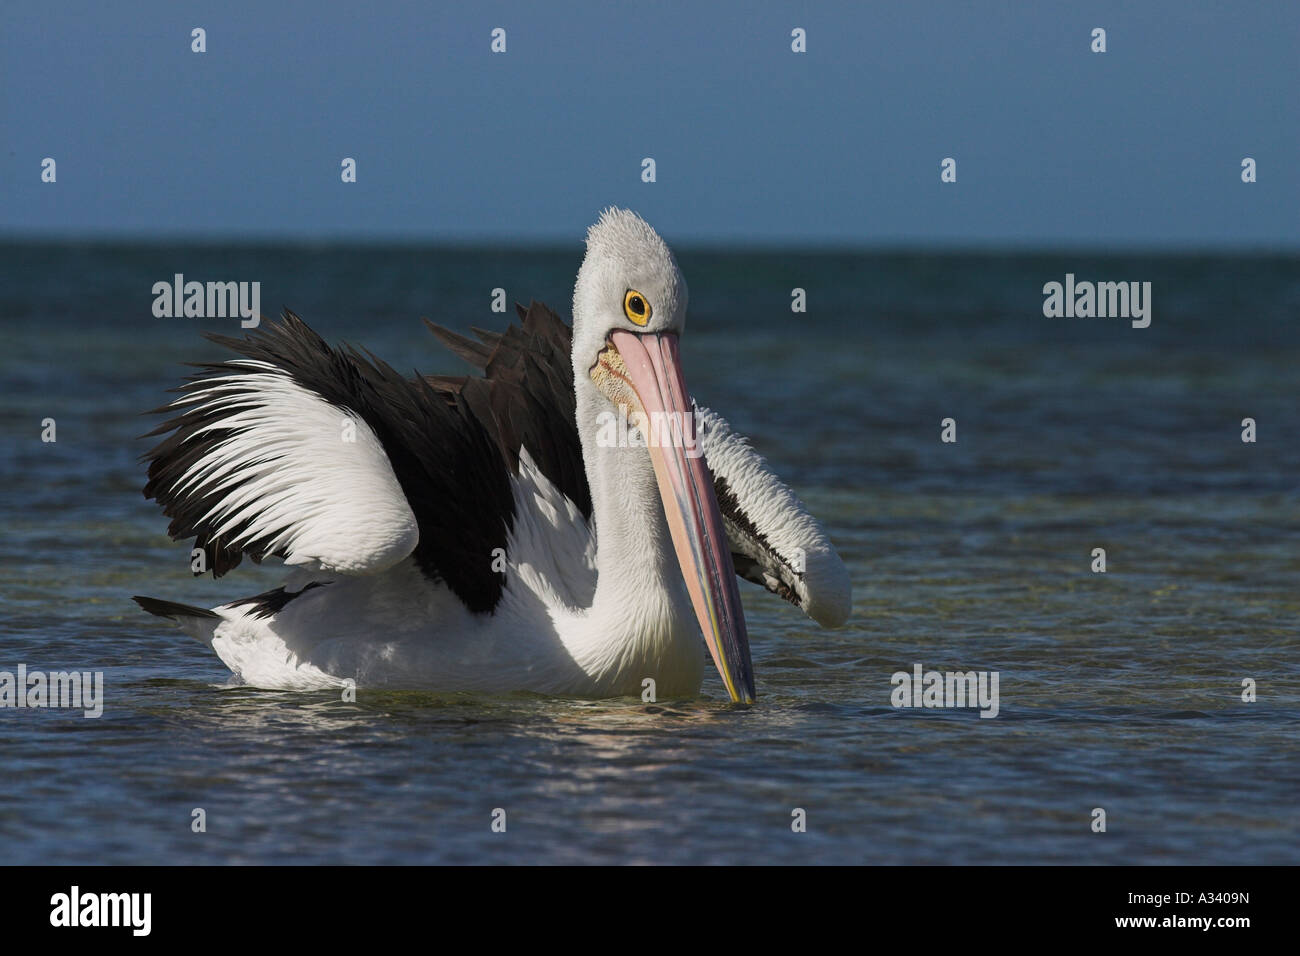 australian pelican, pelecanus conspicillatus,  landing on water Stock Photo